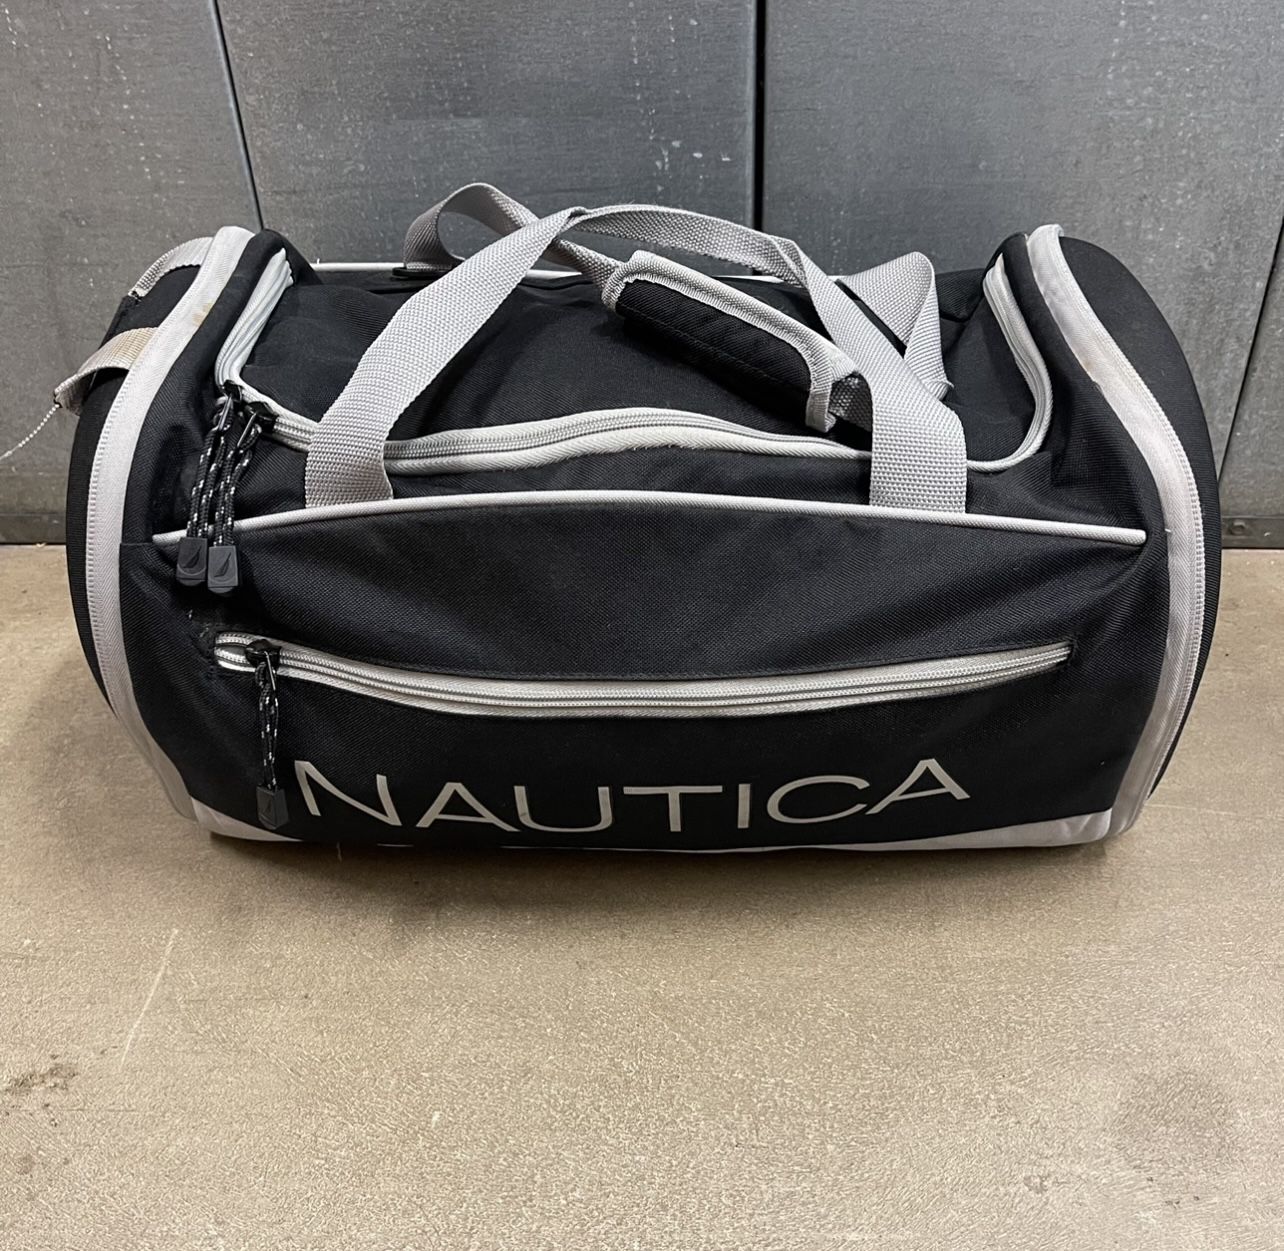 Nautica Duffle Bag Black Gym Bag